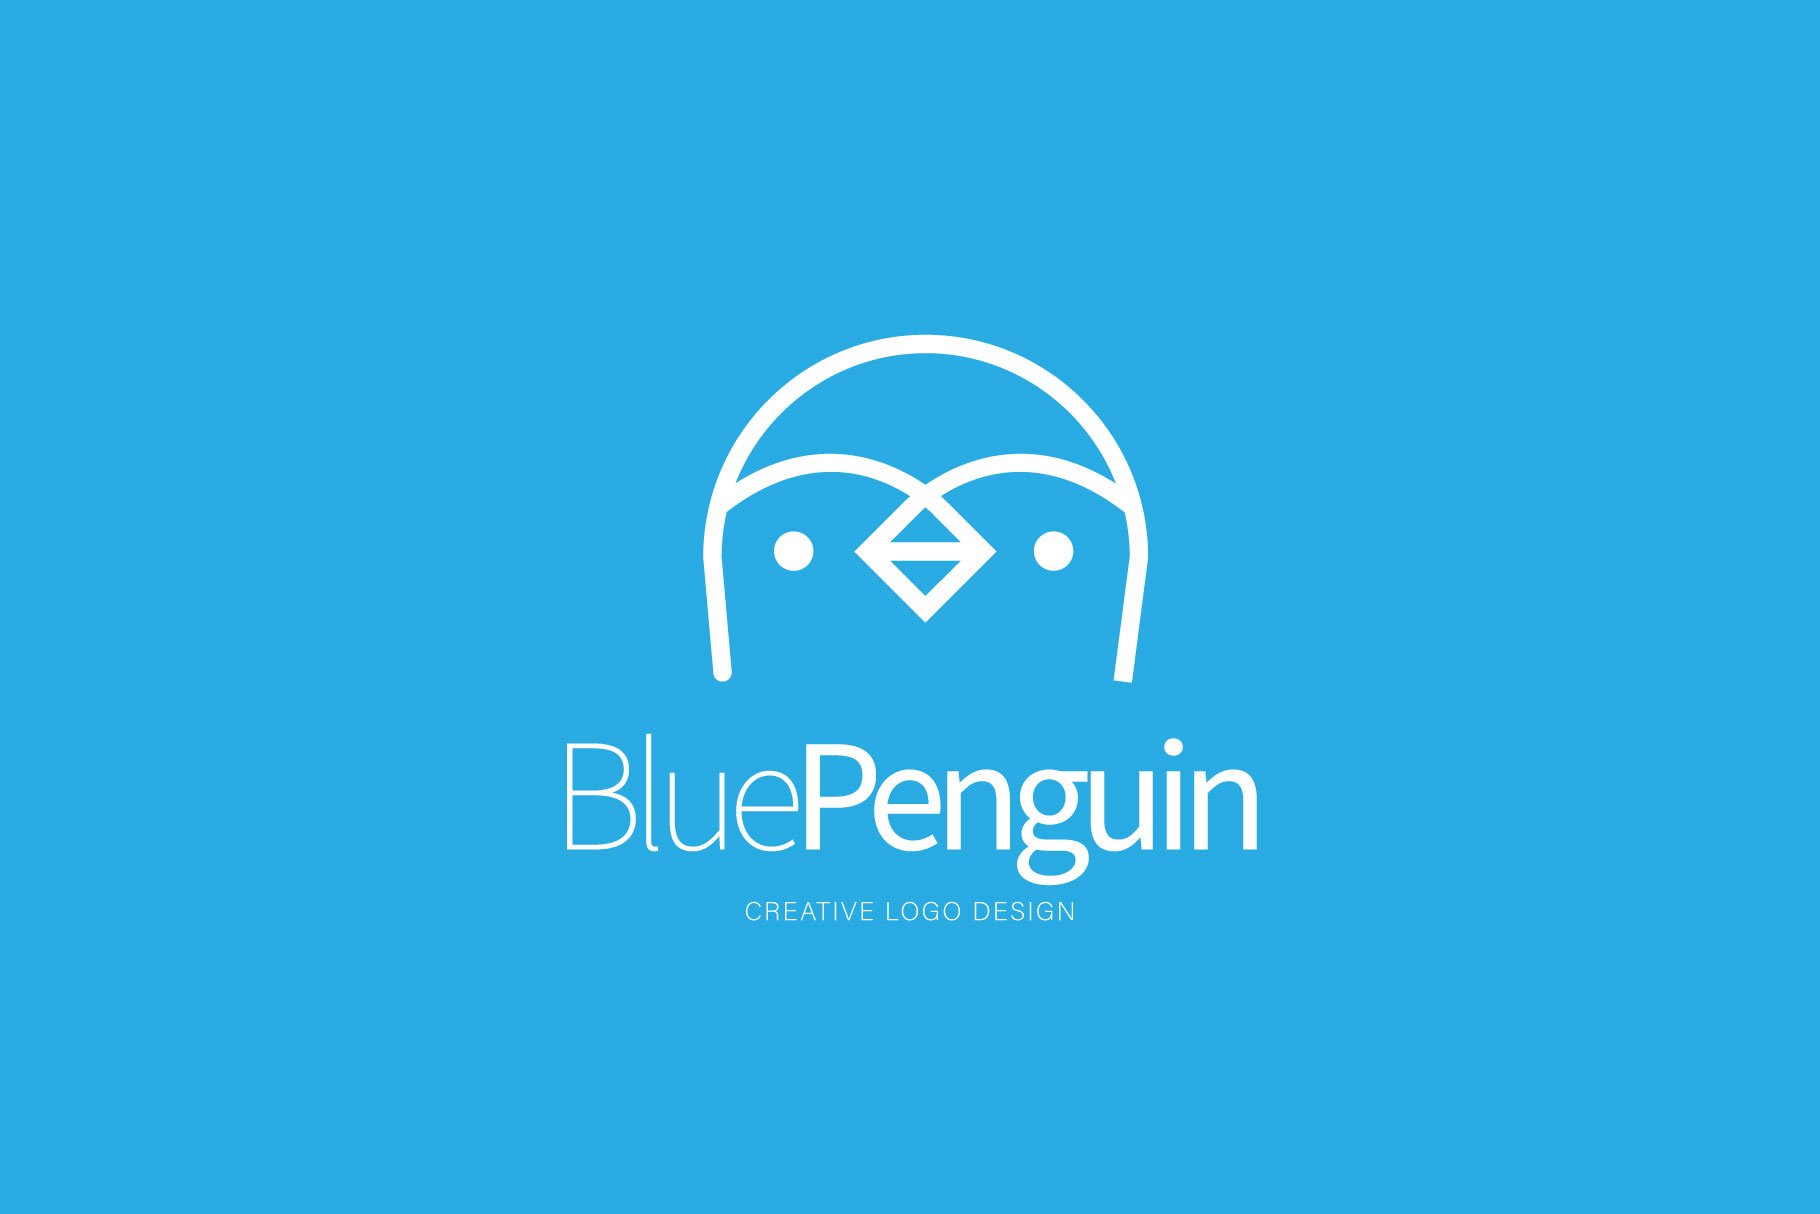 Penguin logo preview image.